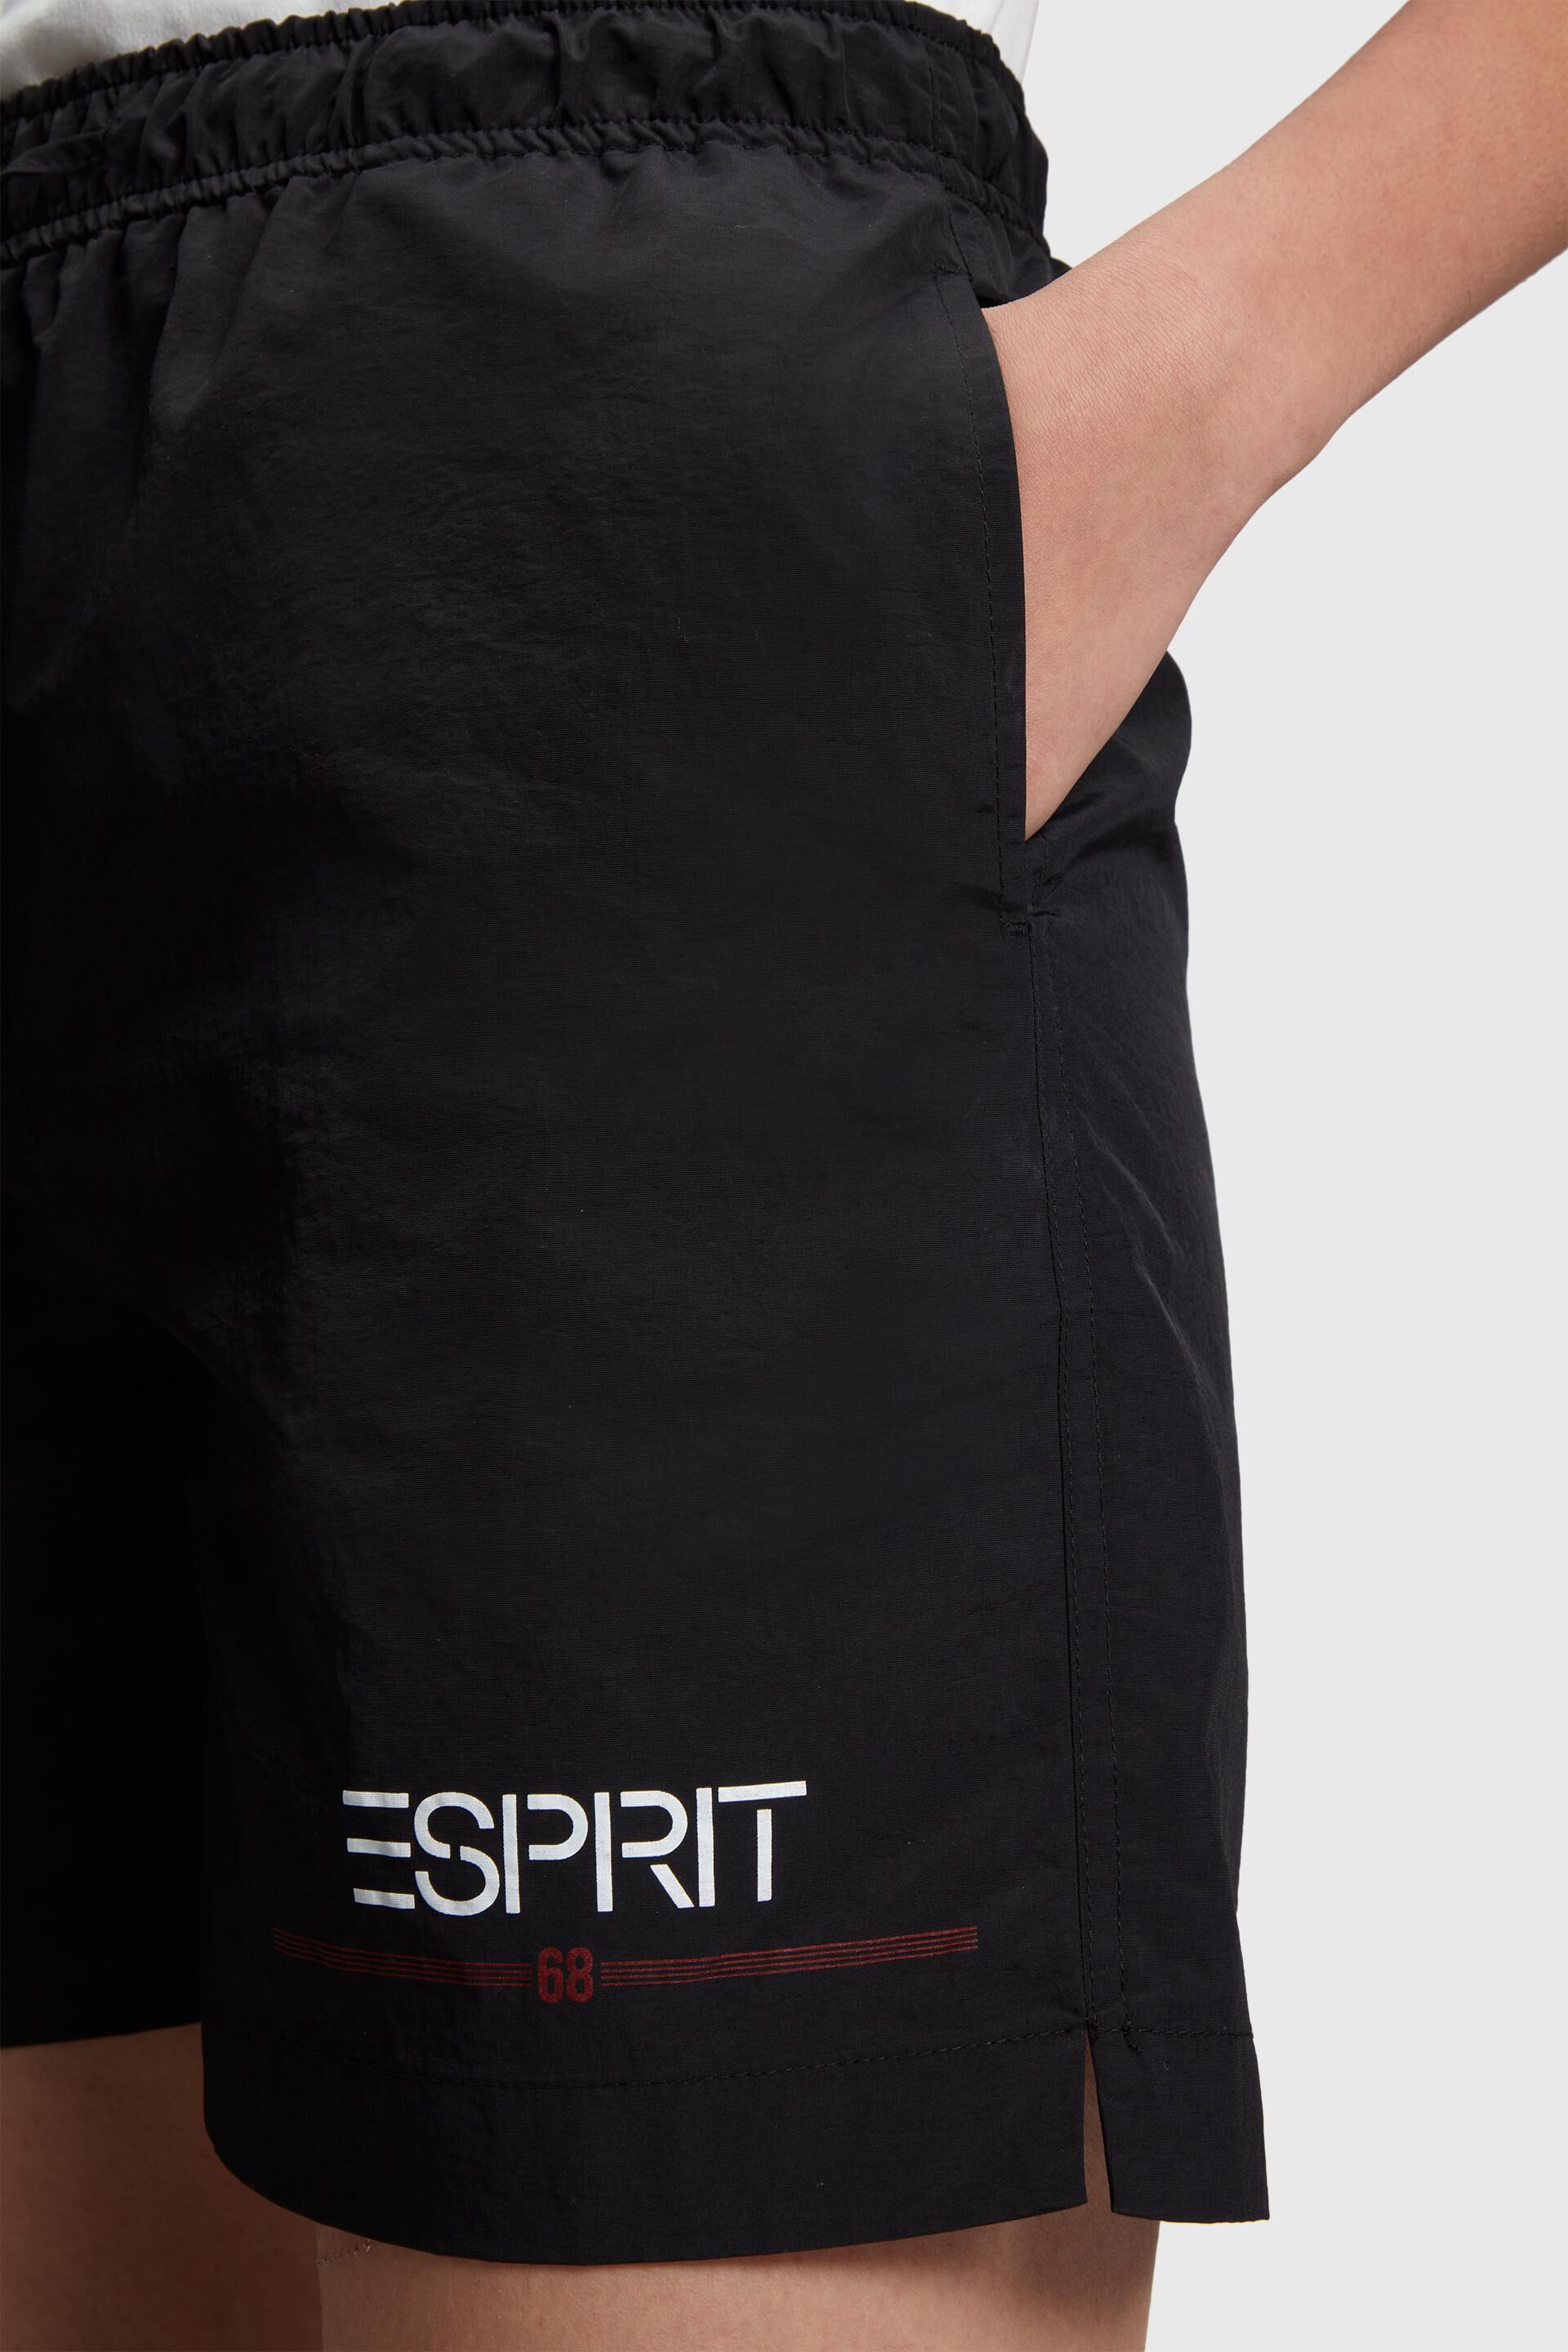 Esprit Windjacke-Shorts Rest Capsule x Recreation ESPRIT &